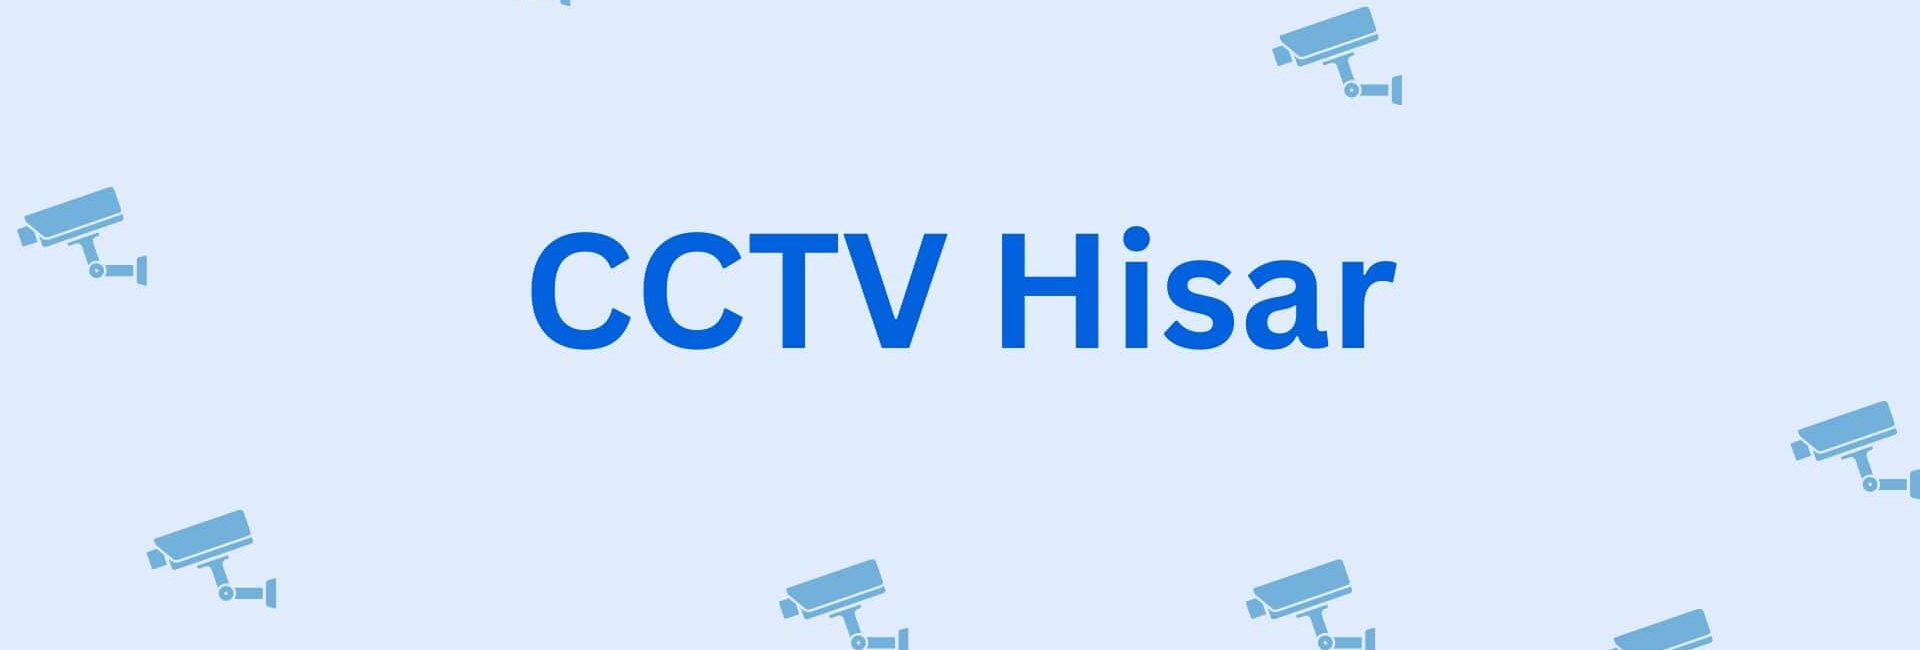 CCTV Hisar - Security Service in Hisar